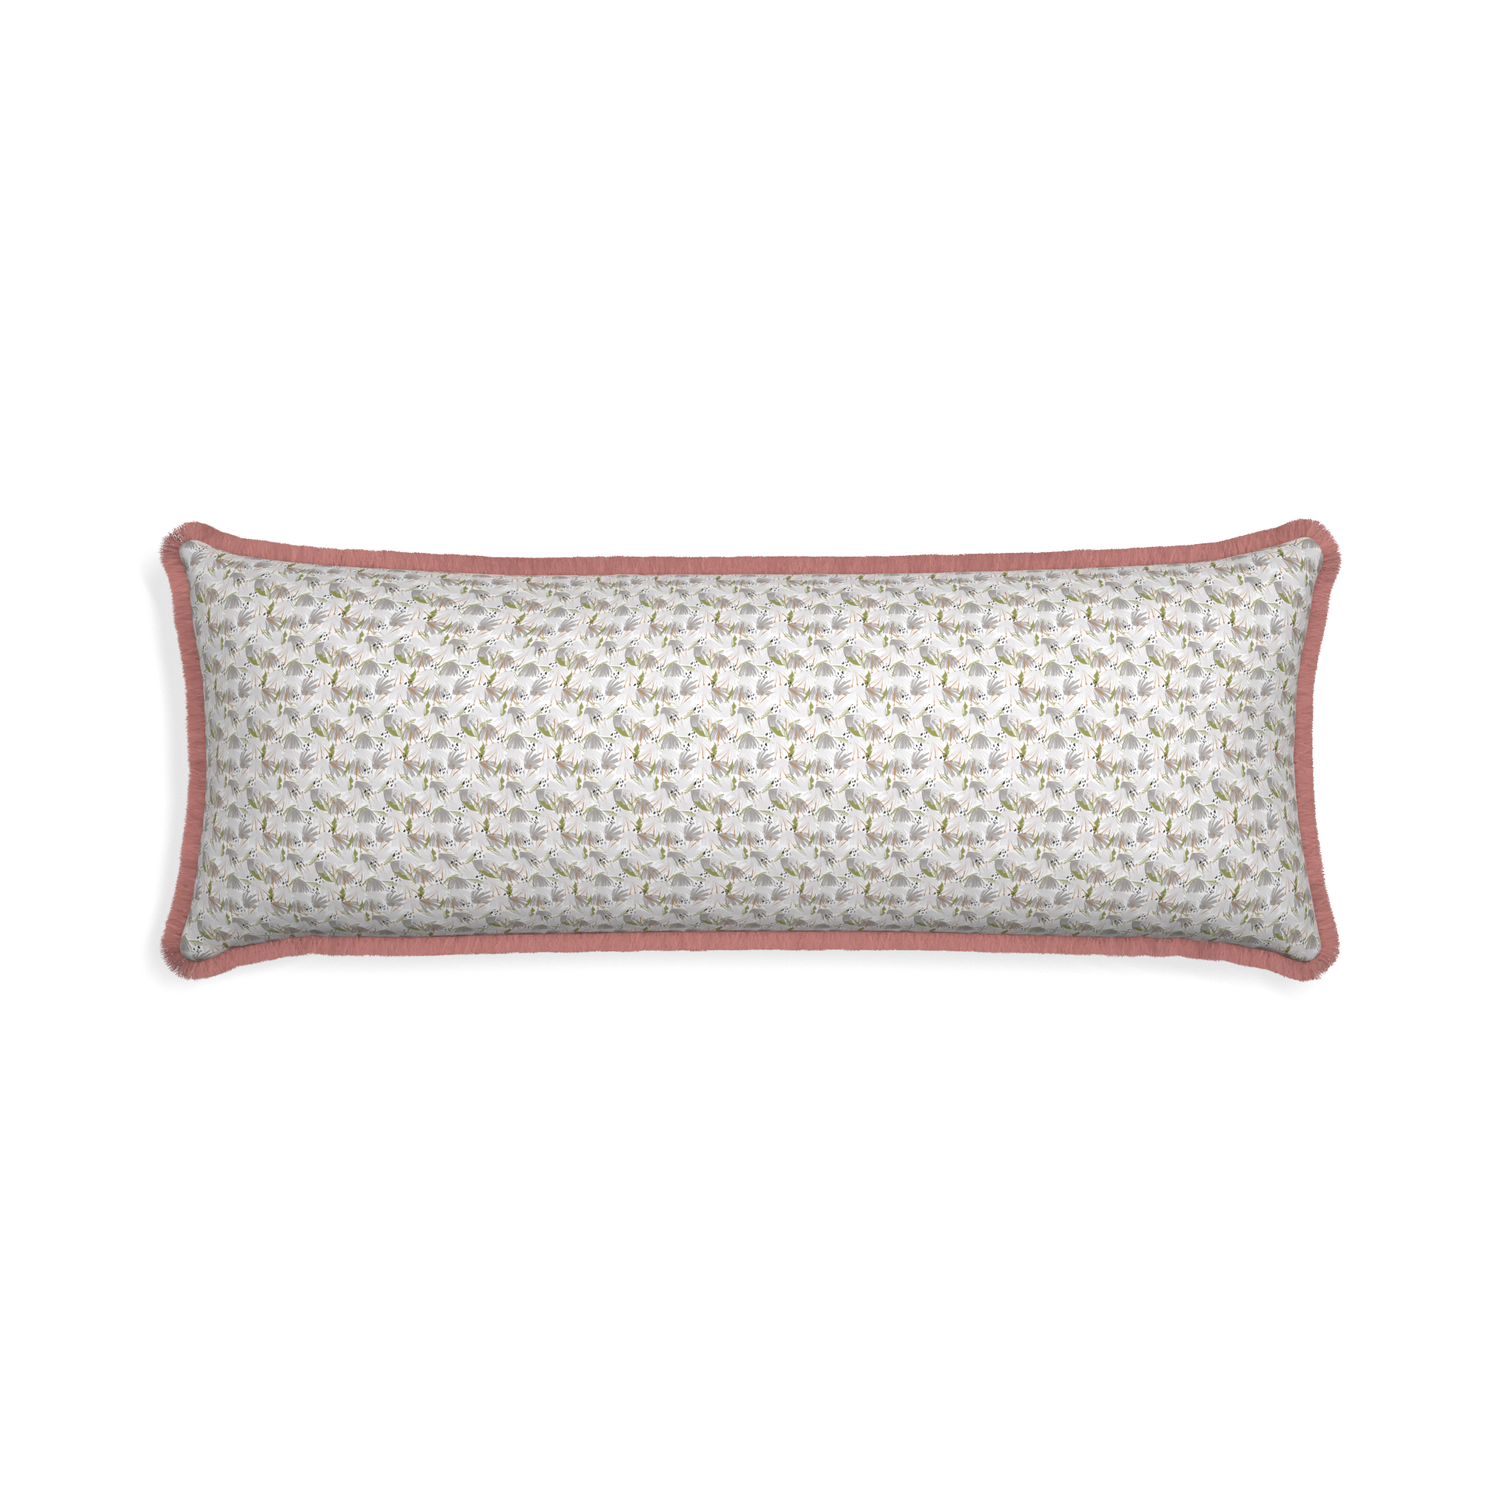 Xl-lumbar eden grey custom pillow with d fringe on white background